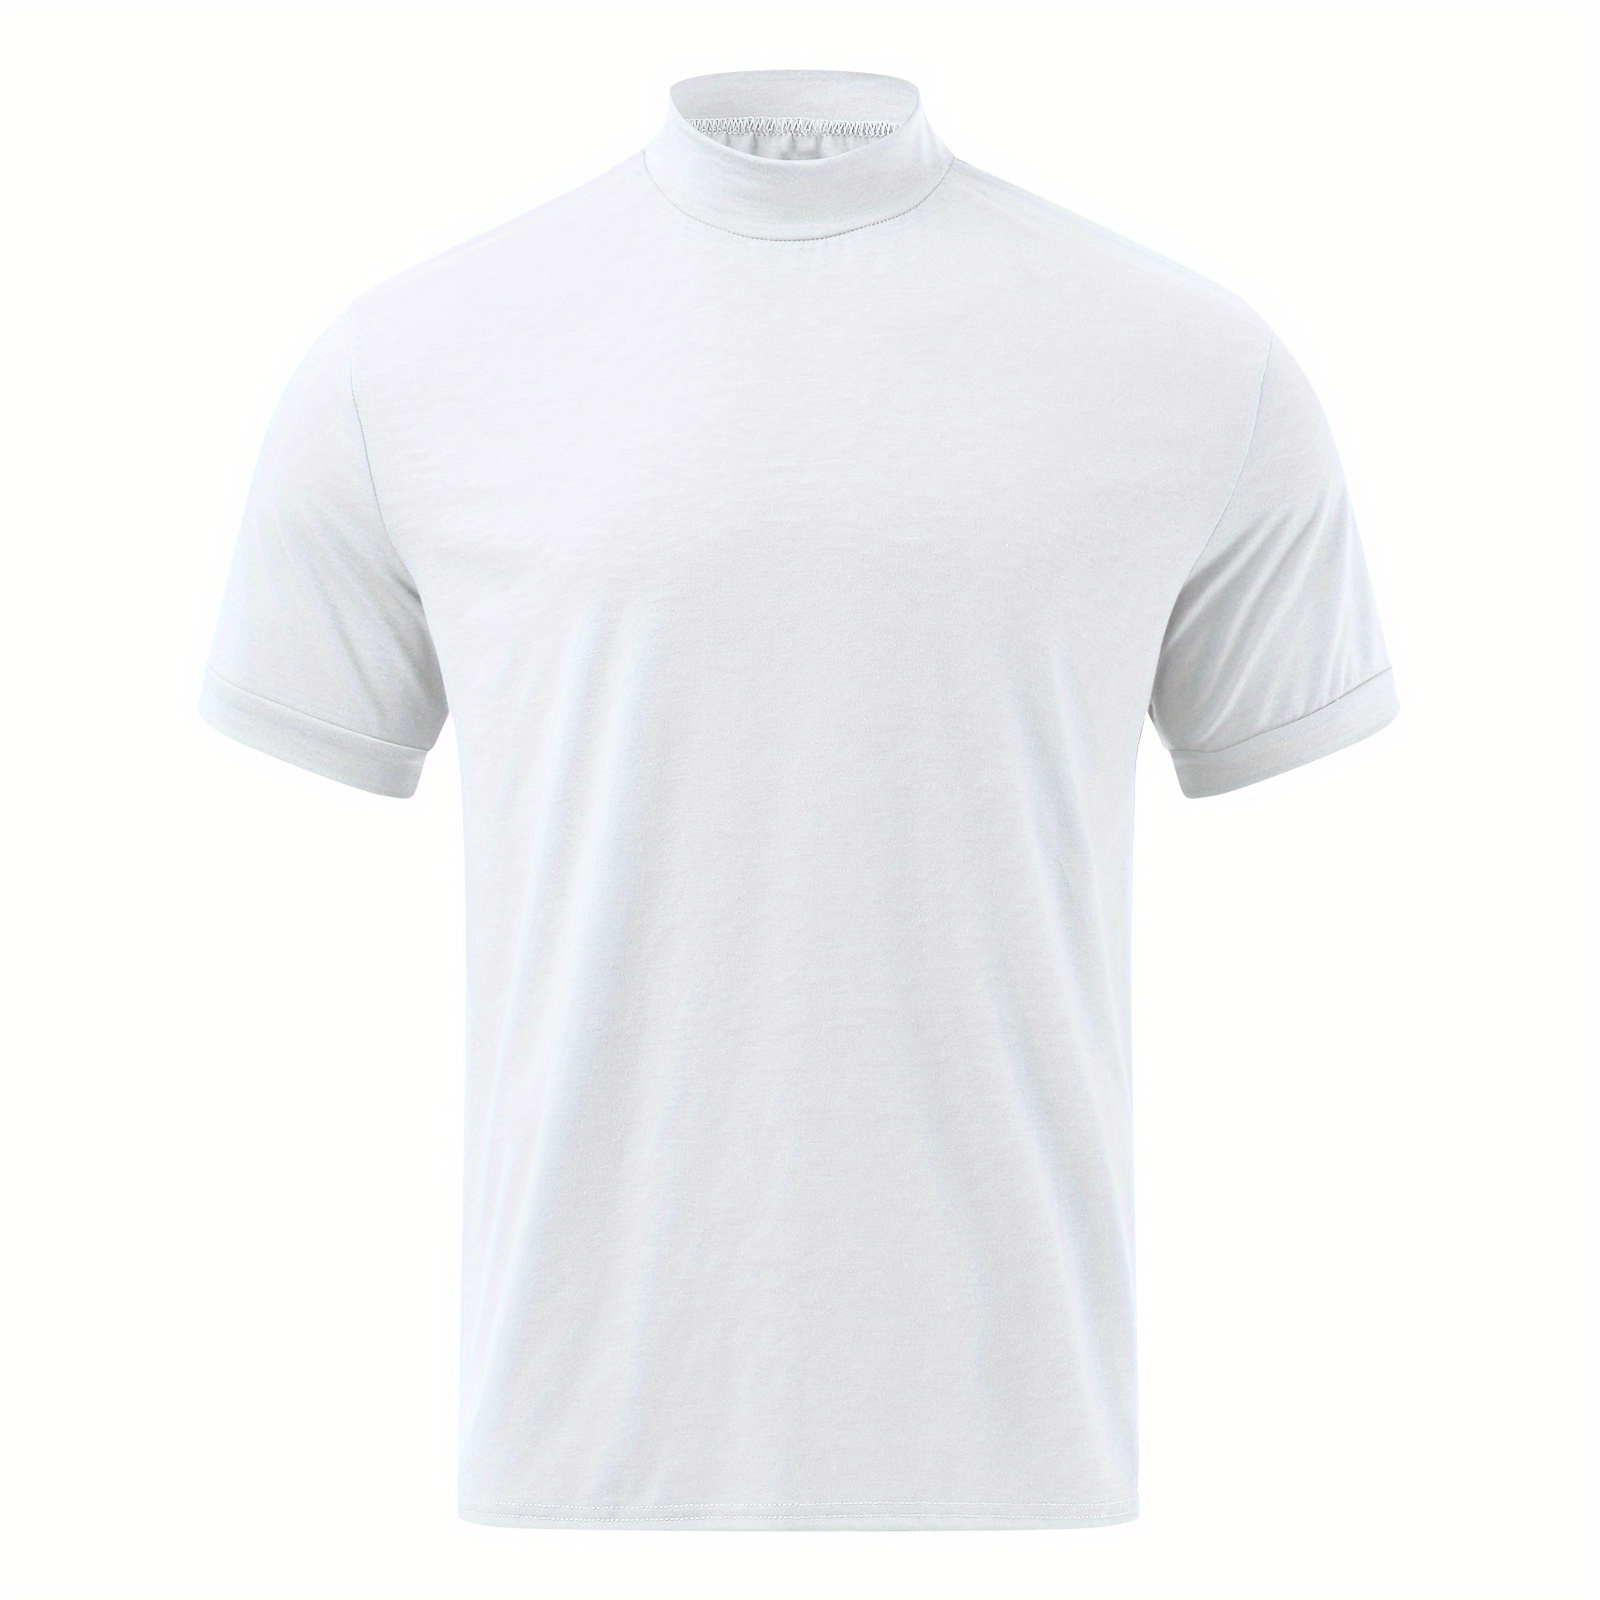 IYTR Mens T-Shrts Fashion Short Sleeve Round Neck Shirts Summer